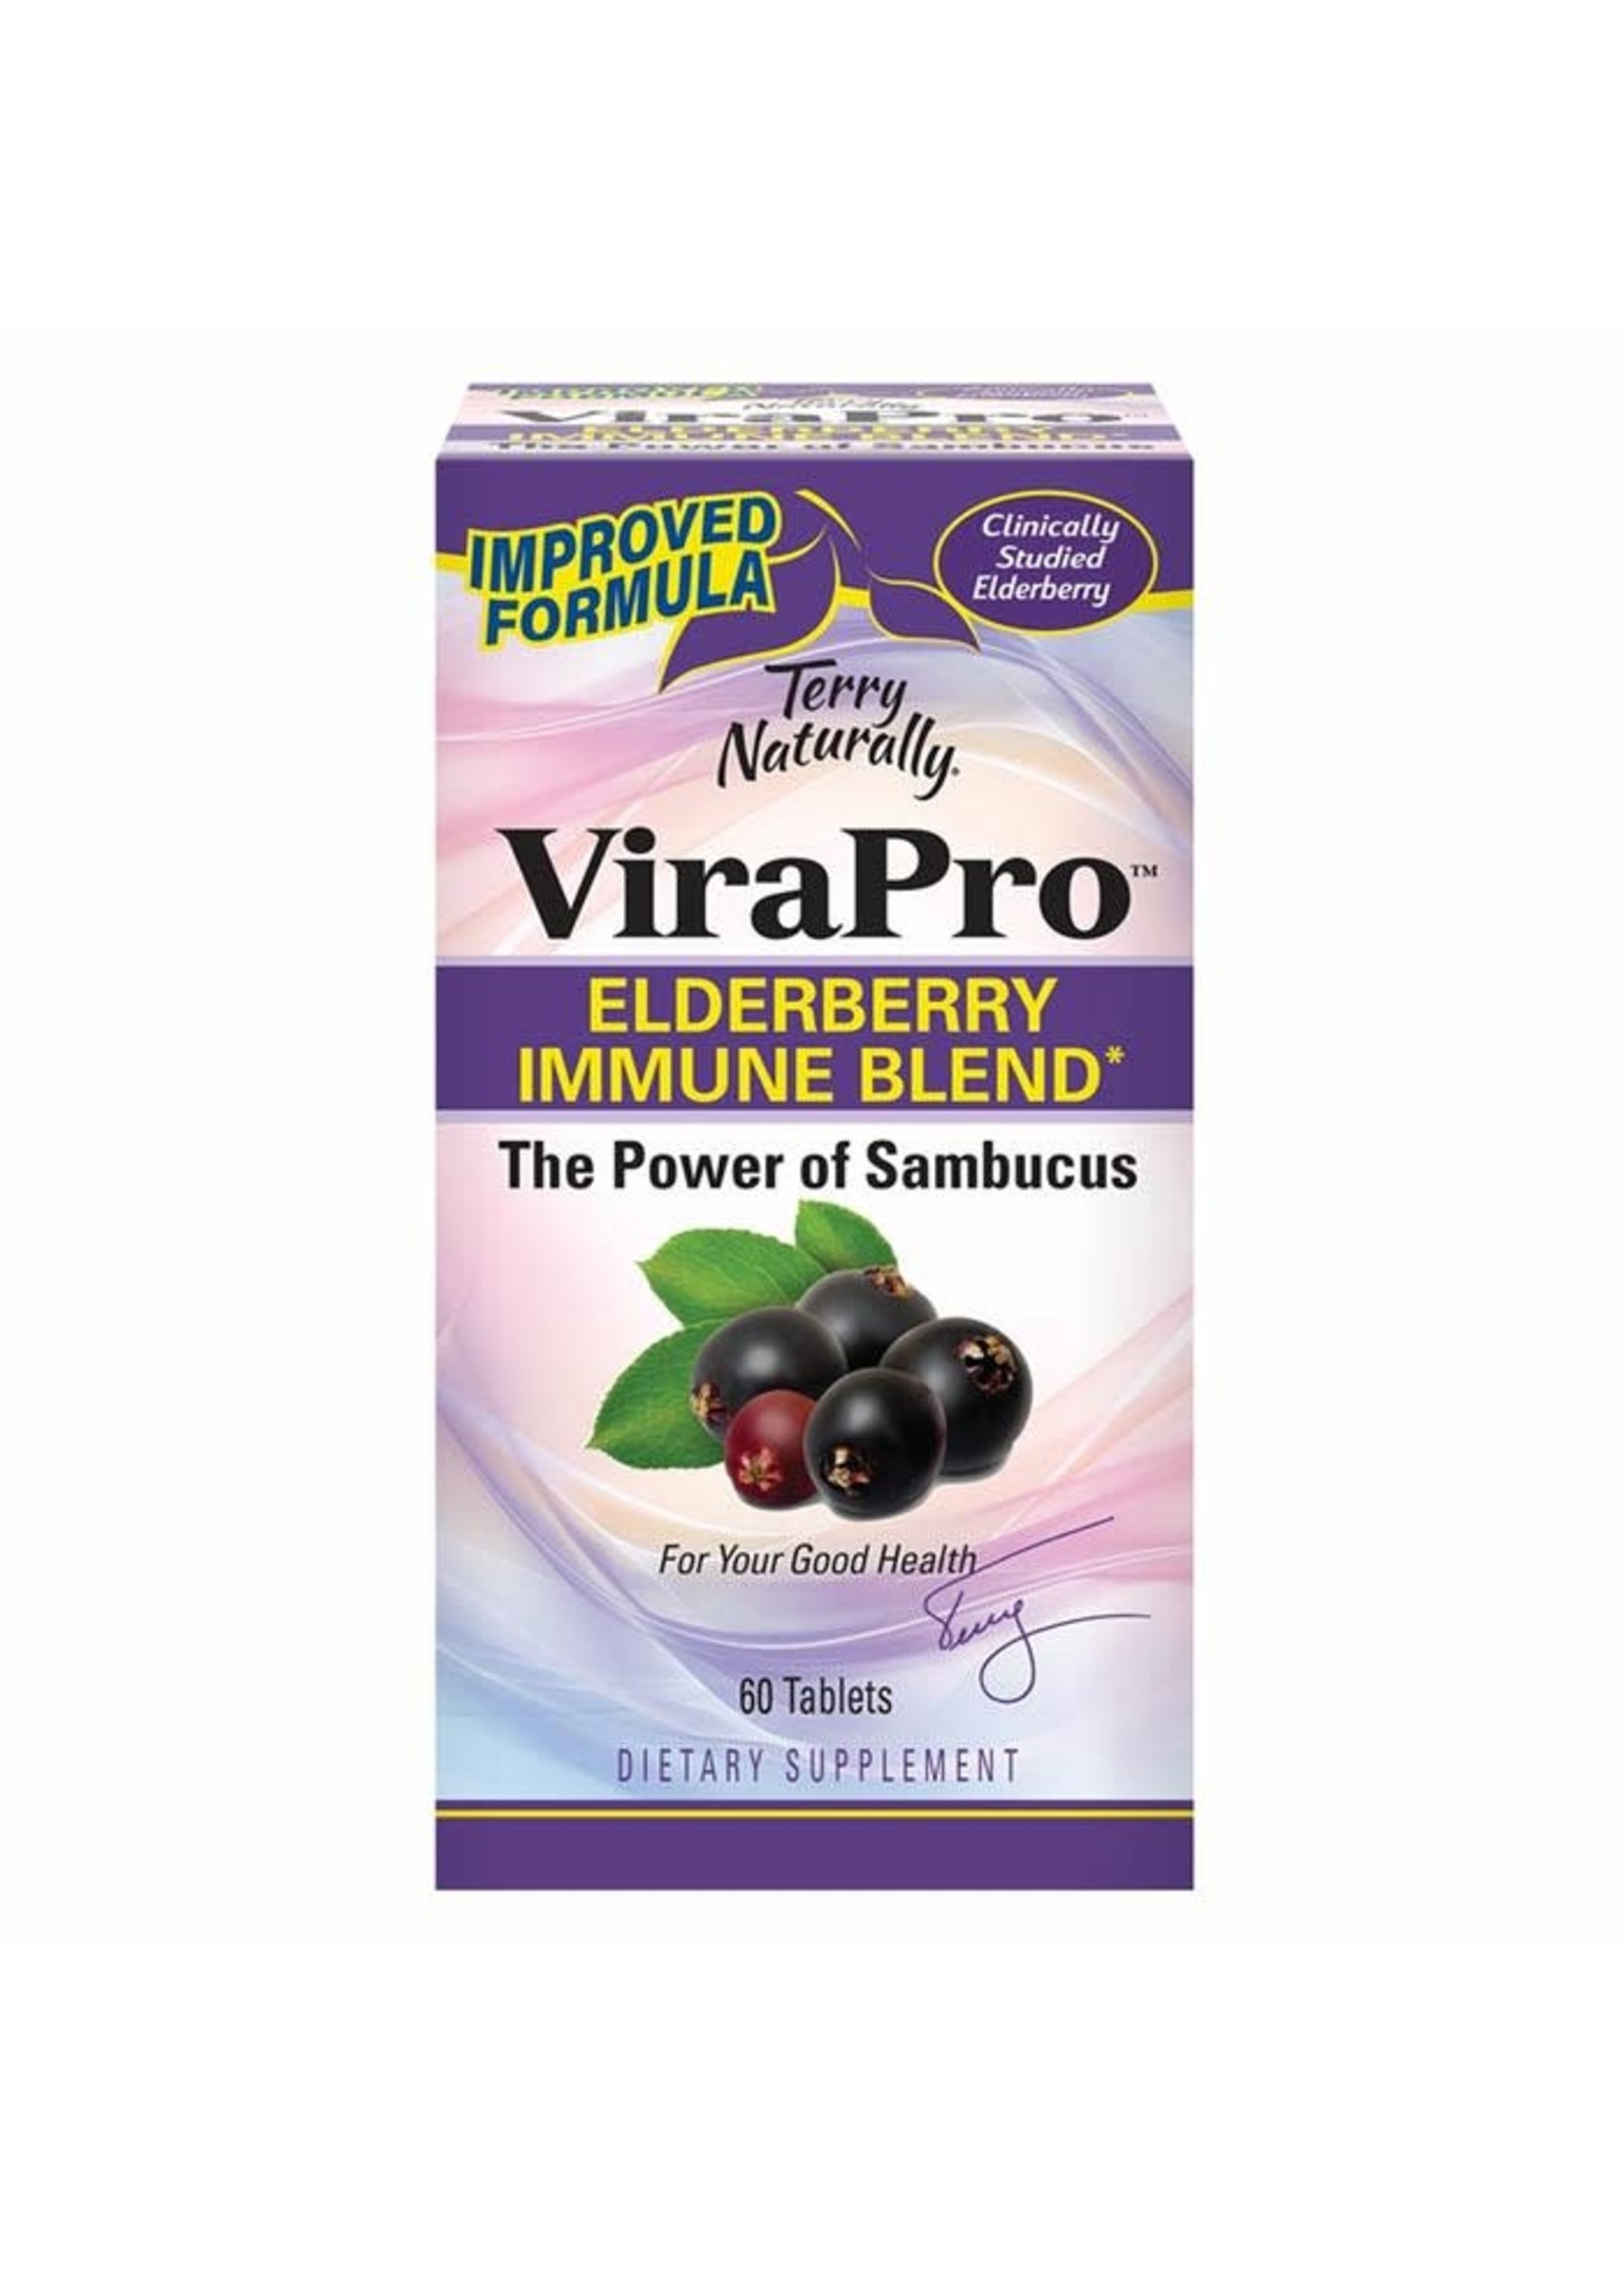 Terry Naturally Vira Pro Elderberry Immune Blend